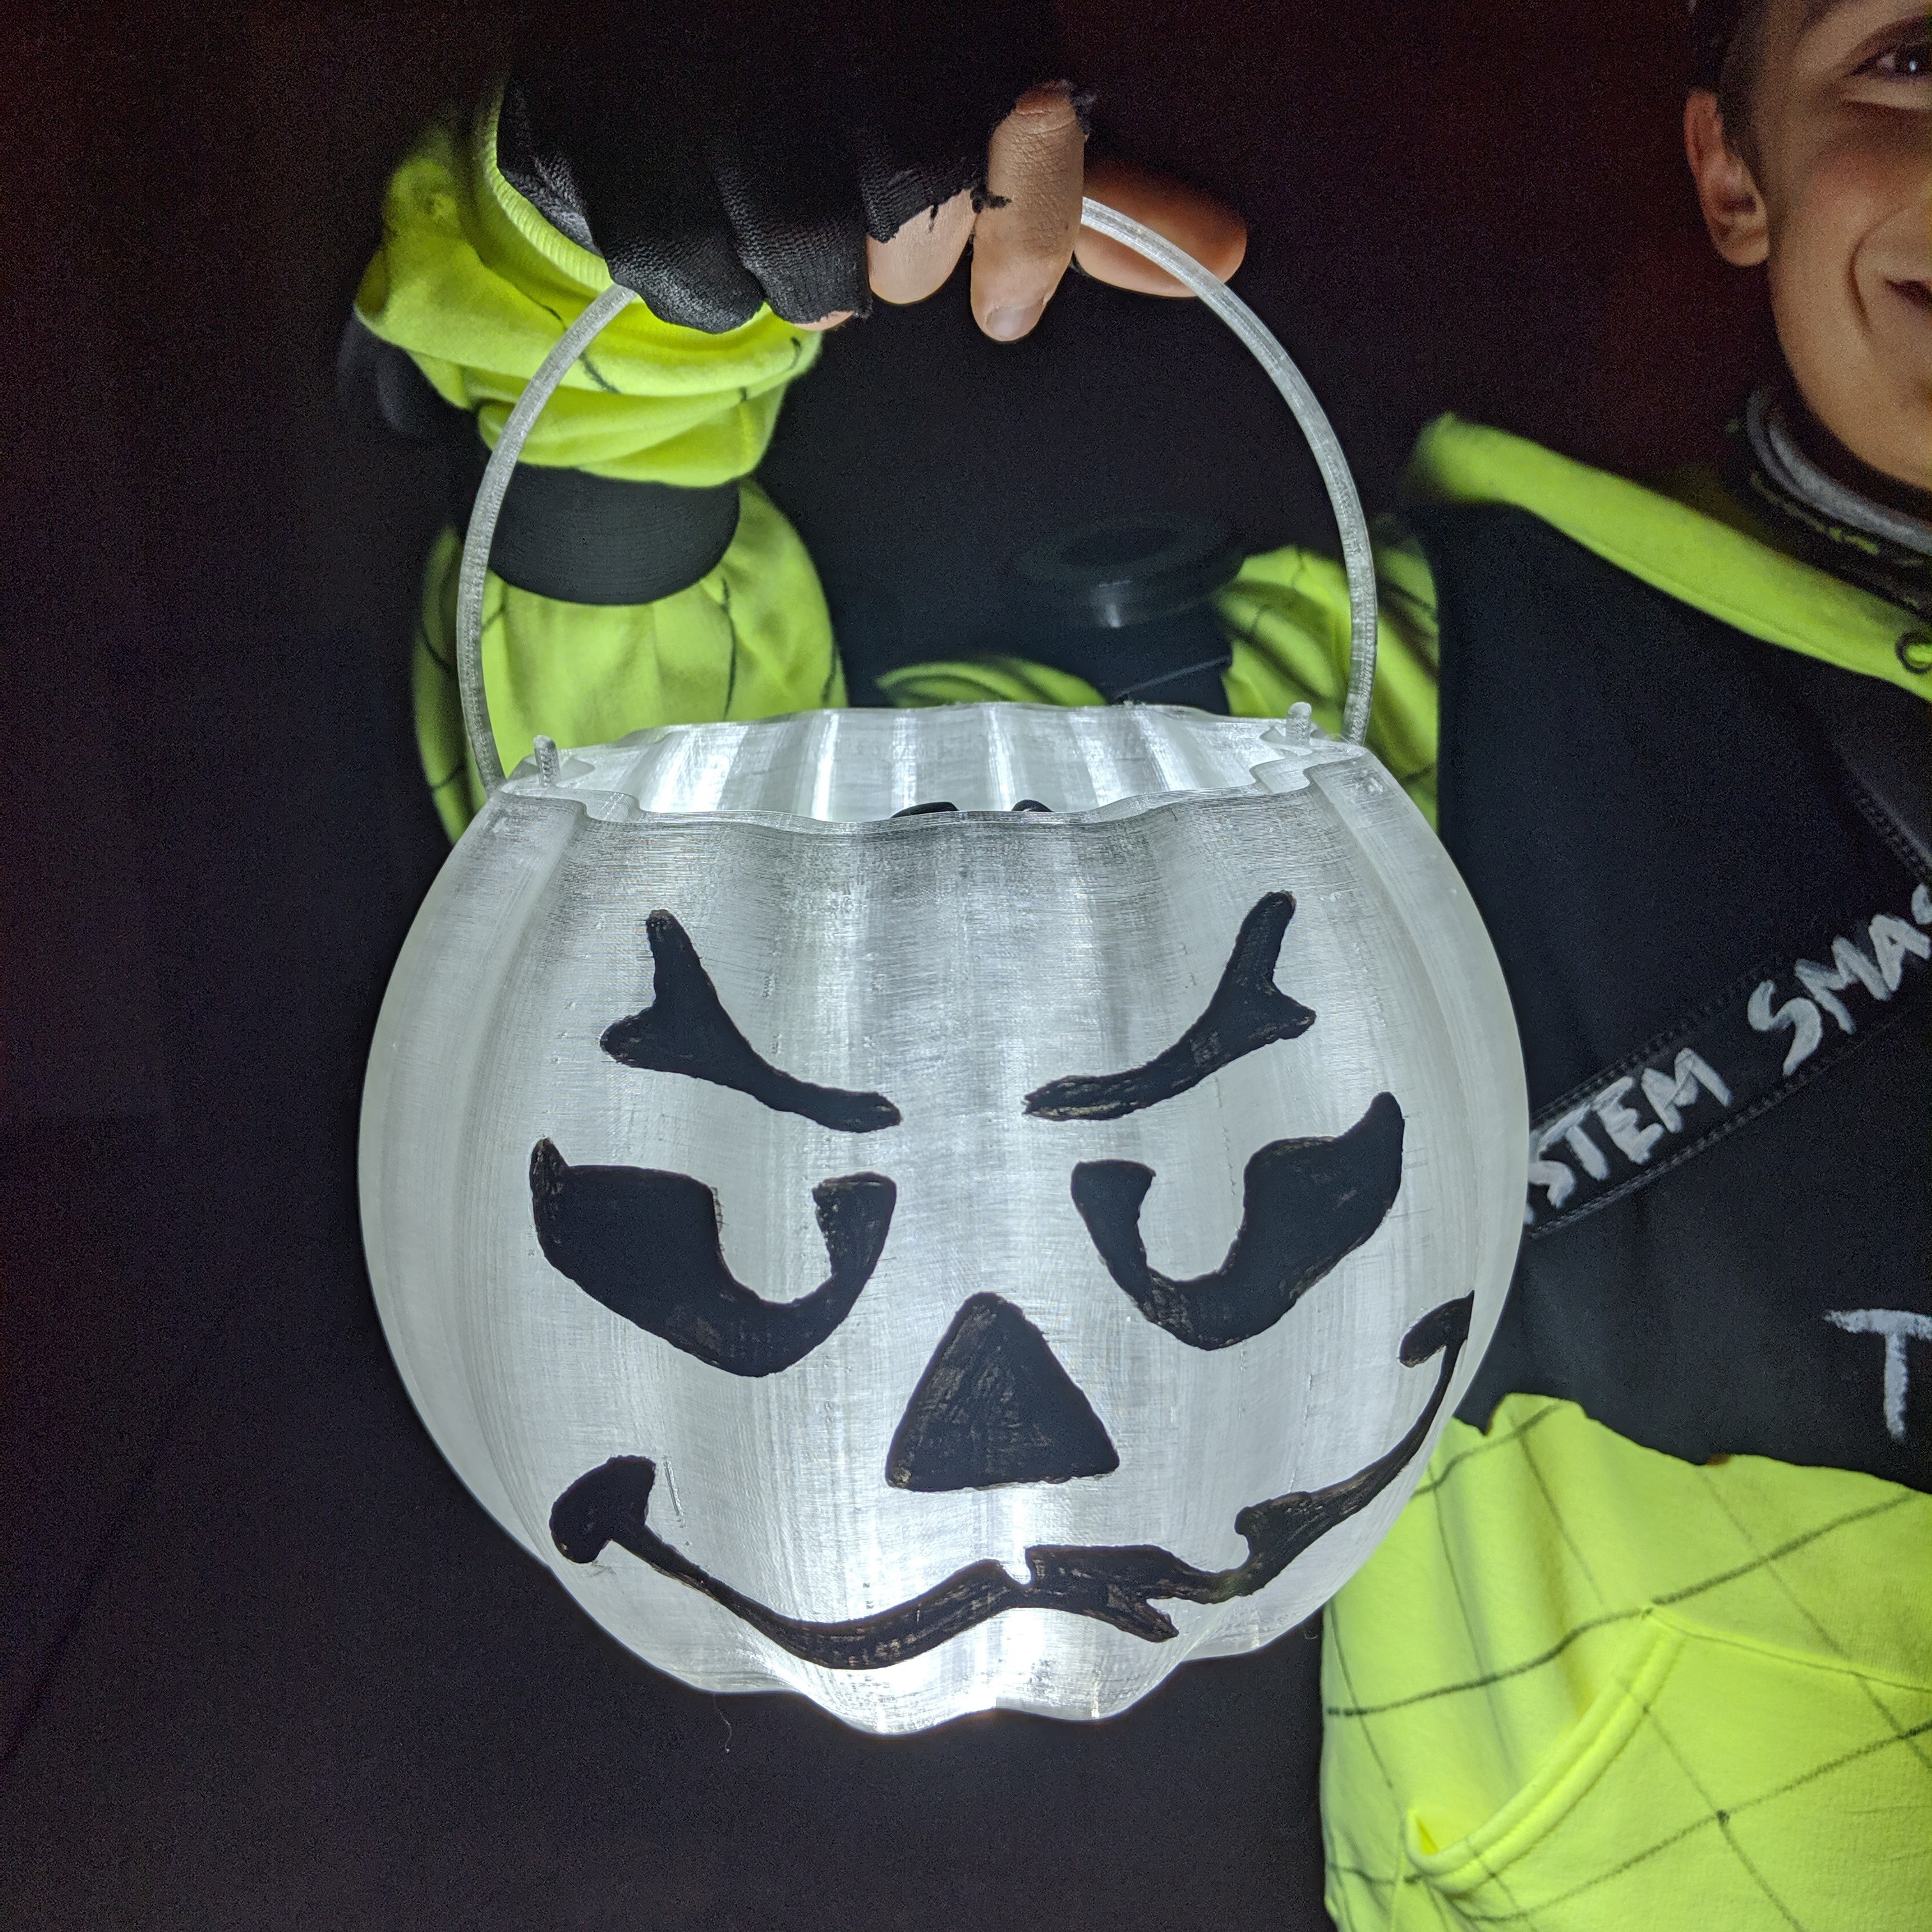 Lighted jack-o-lantern pumpkin candy pale.  Safe and fun!